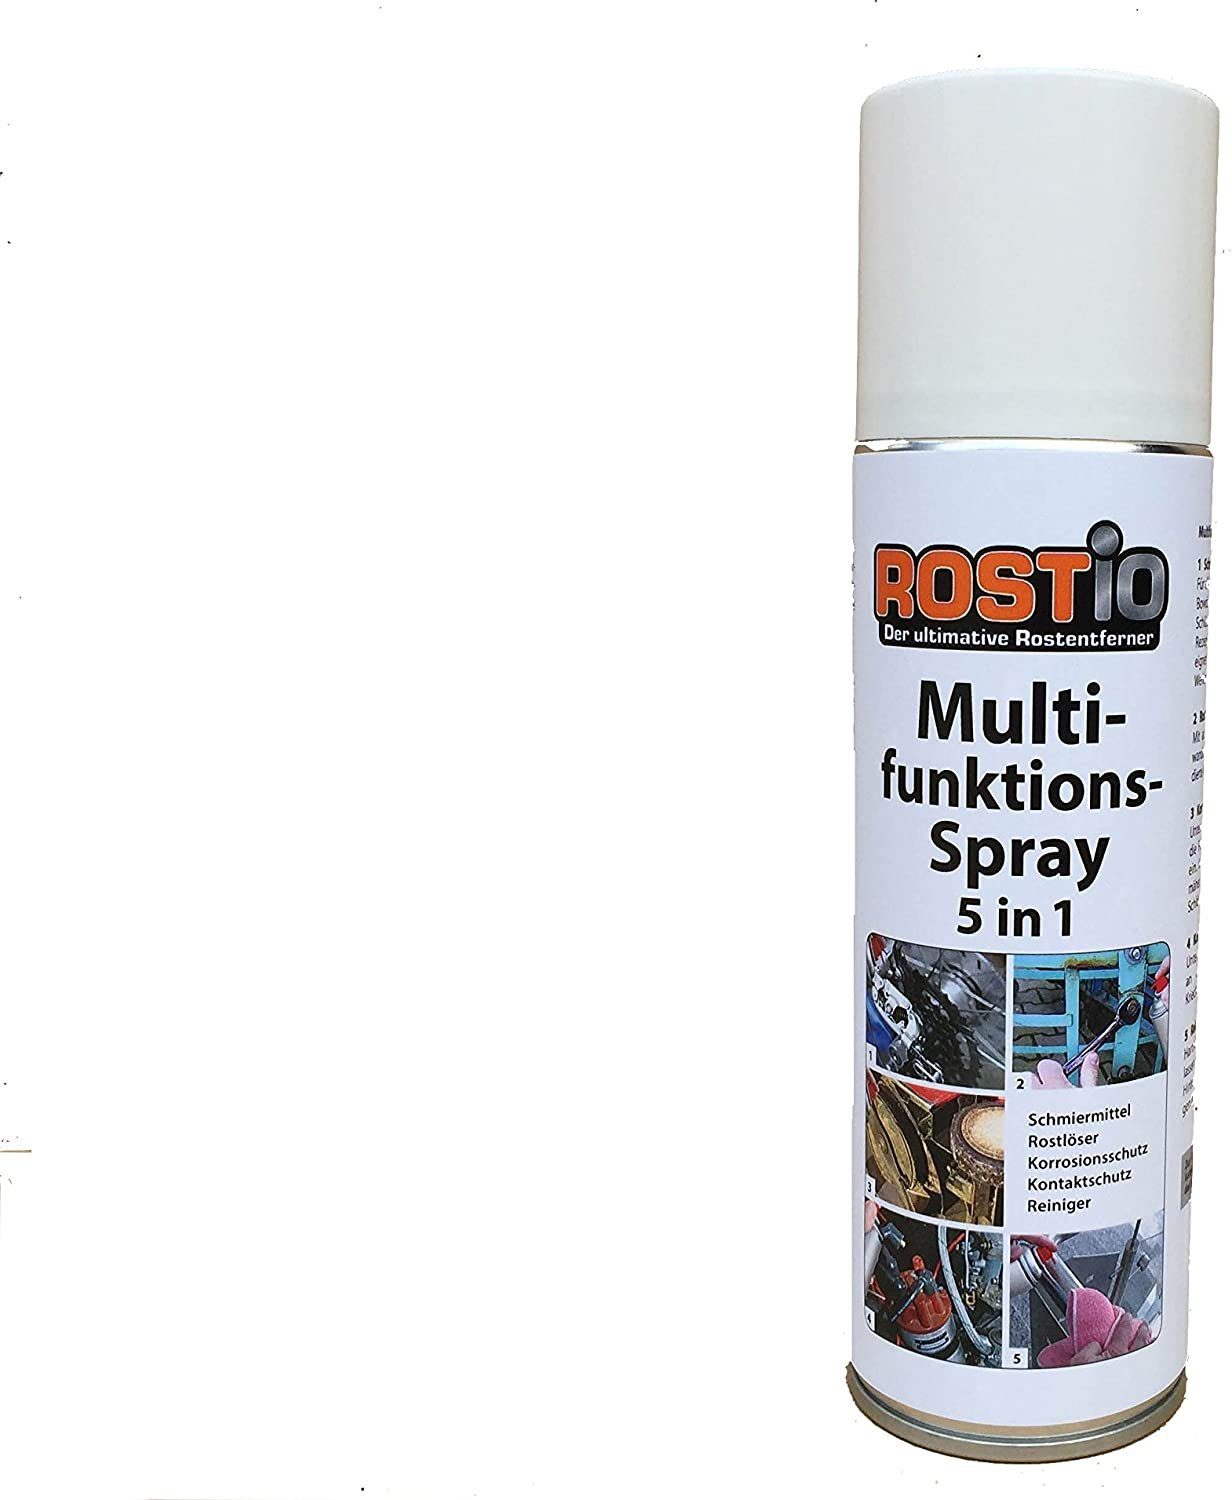 Rostio Multifunktionsspray 5 in 1 Mutifunktionsöl Rostentferner